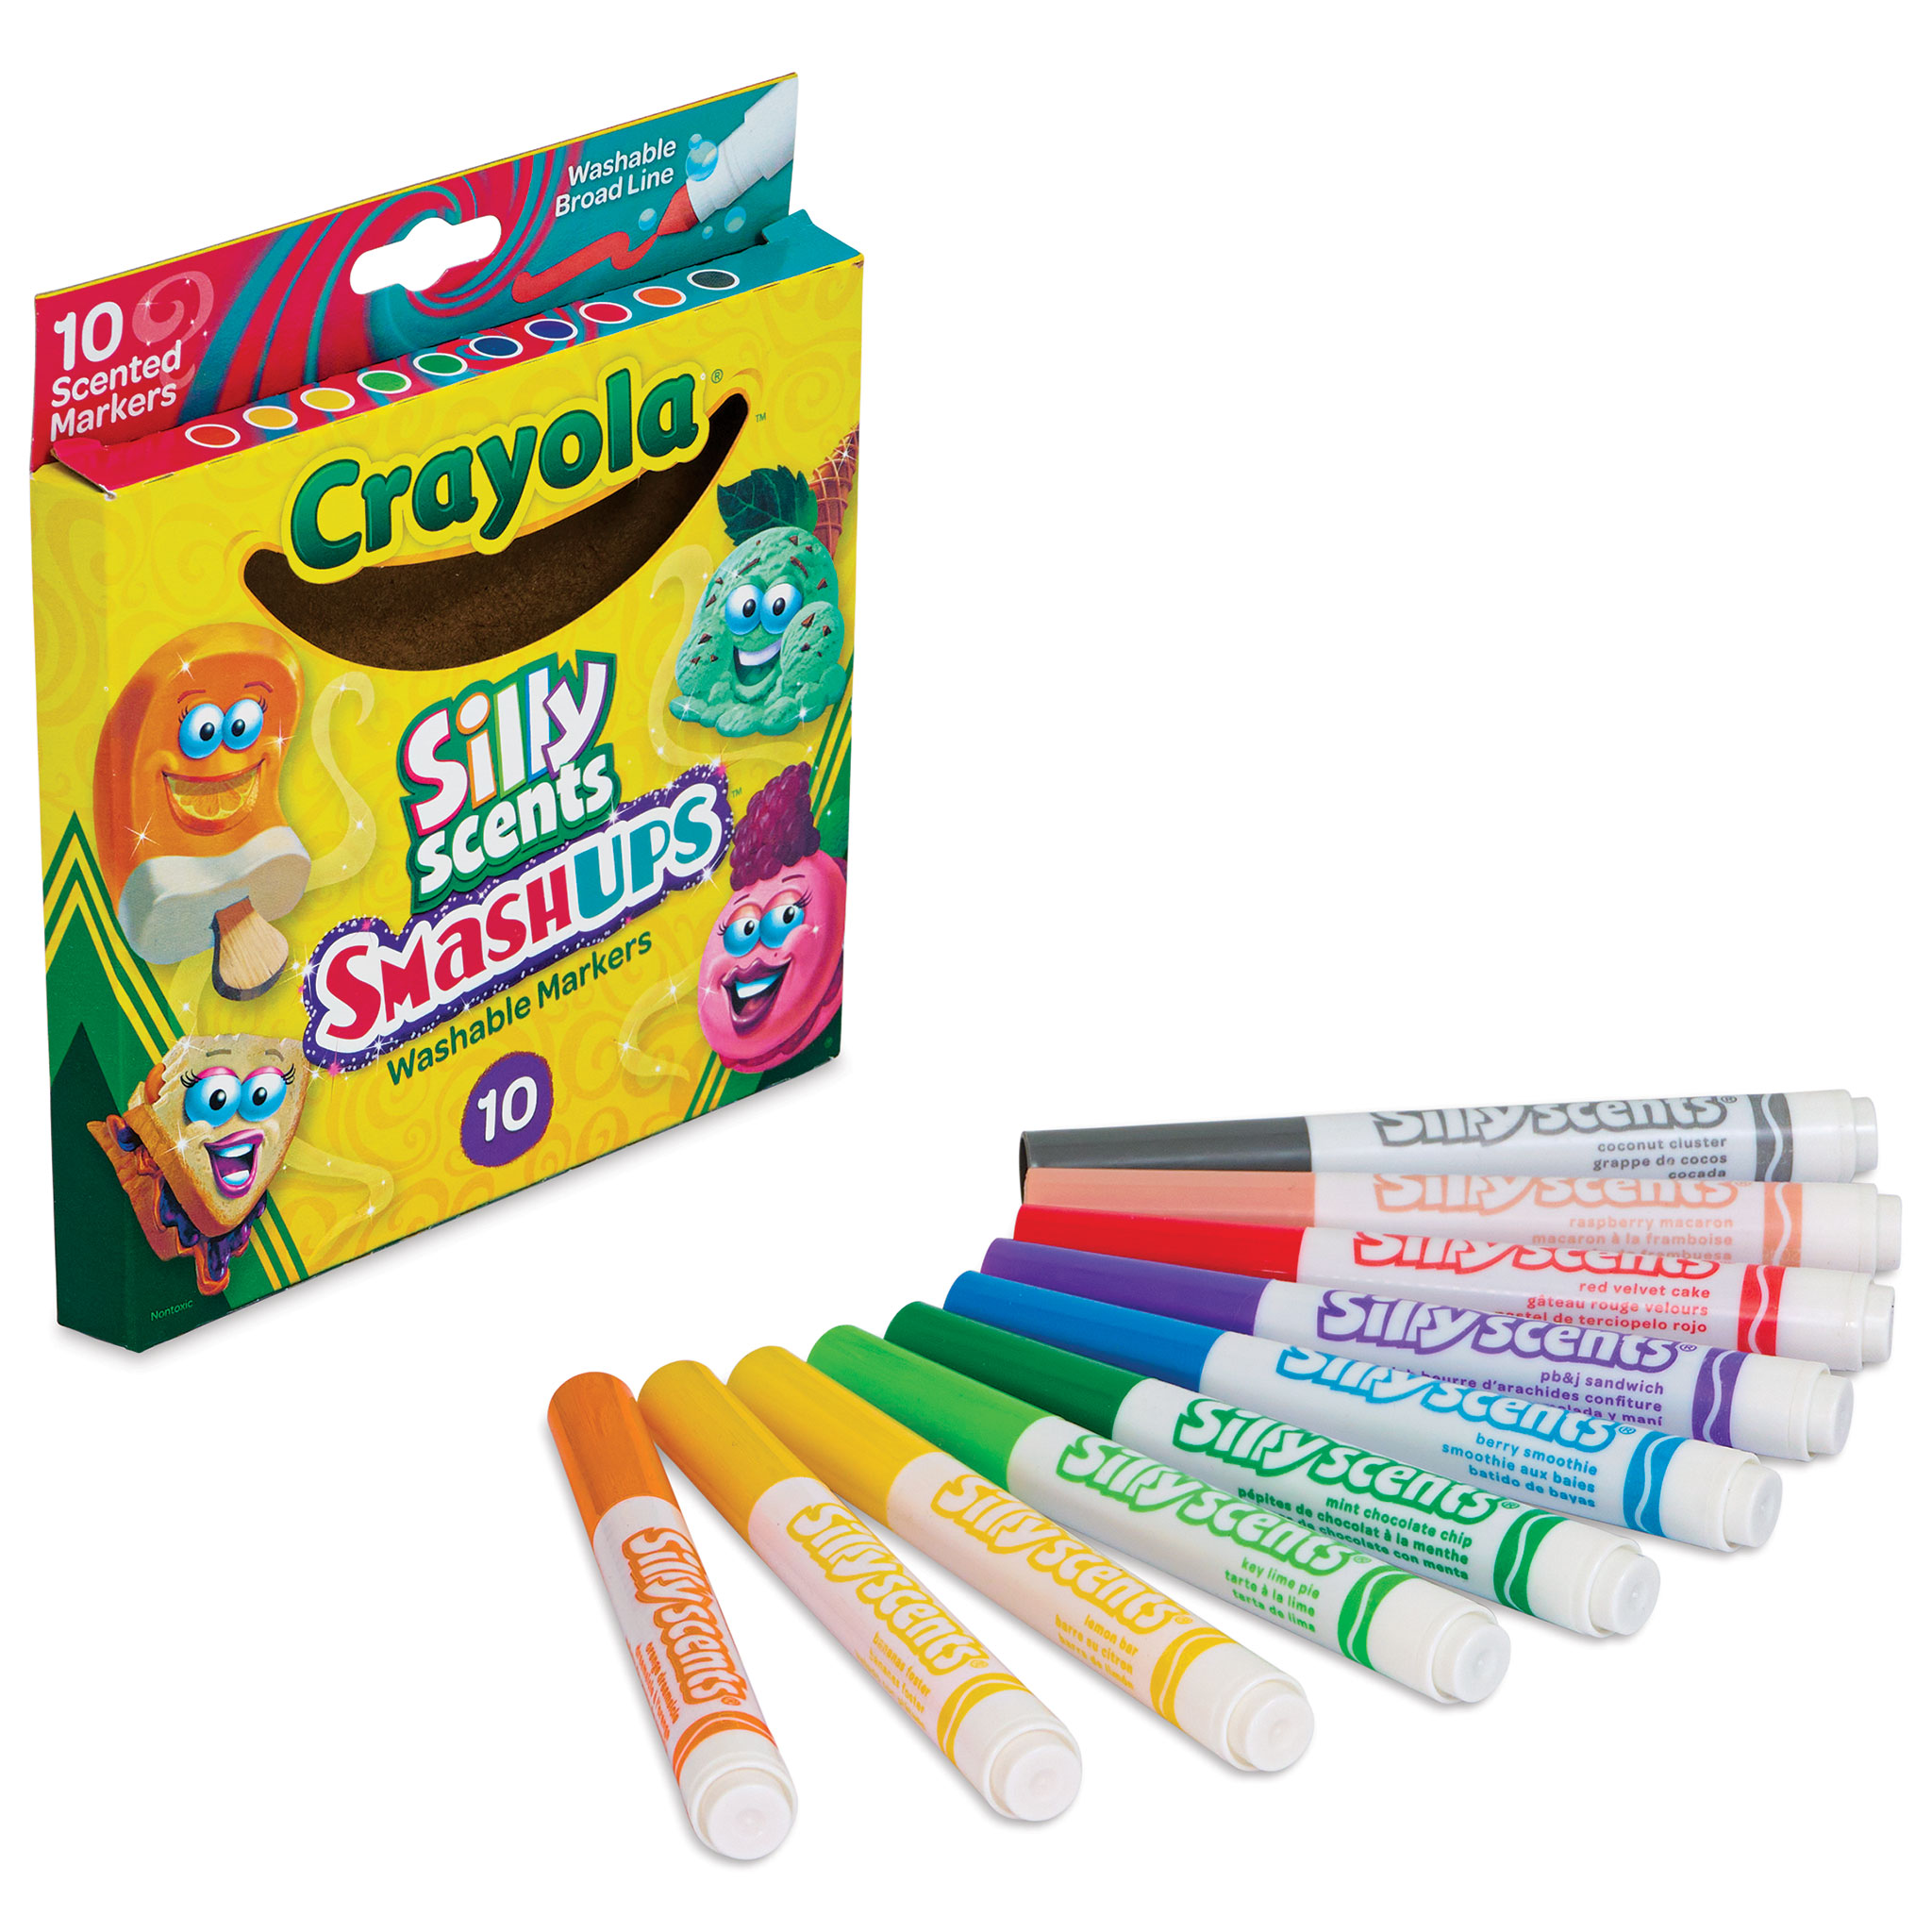 Crayola Silly Scent Smashups Marker Set